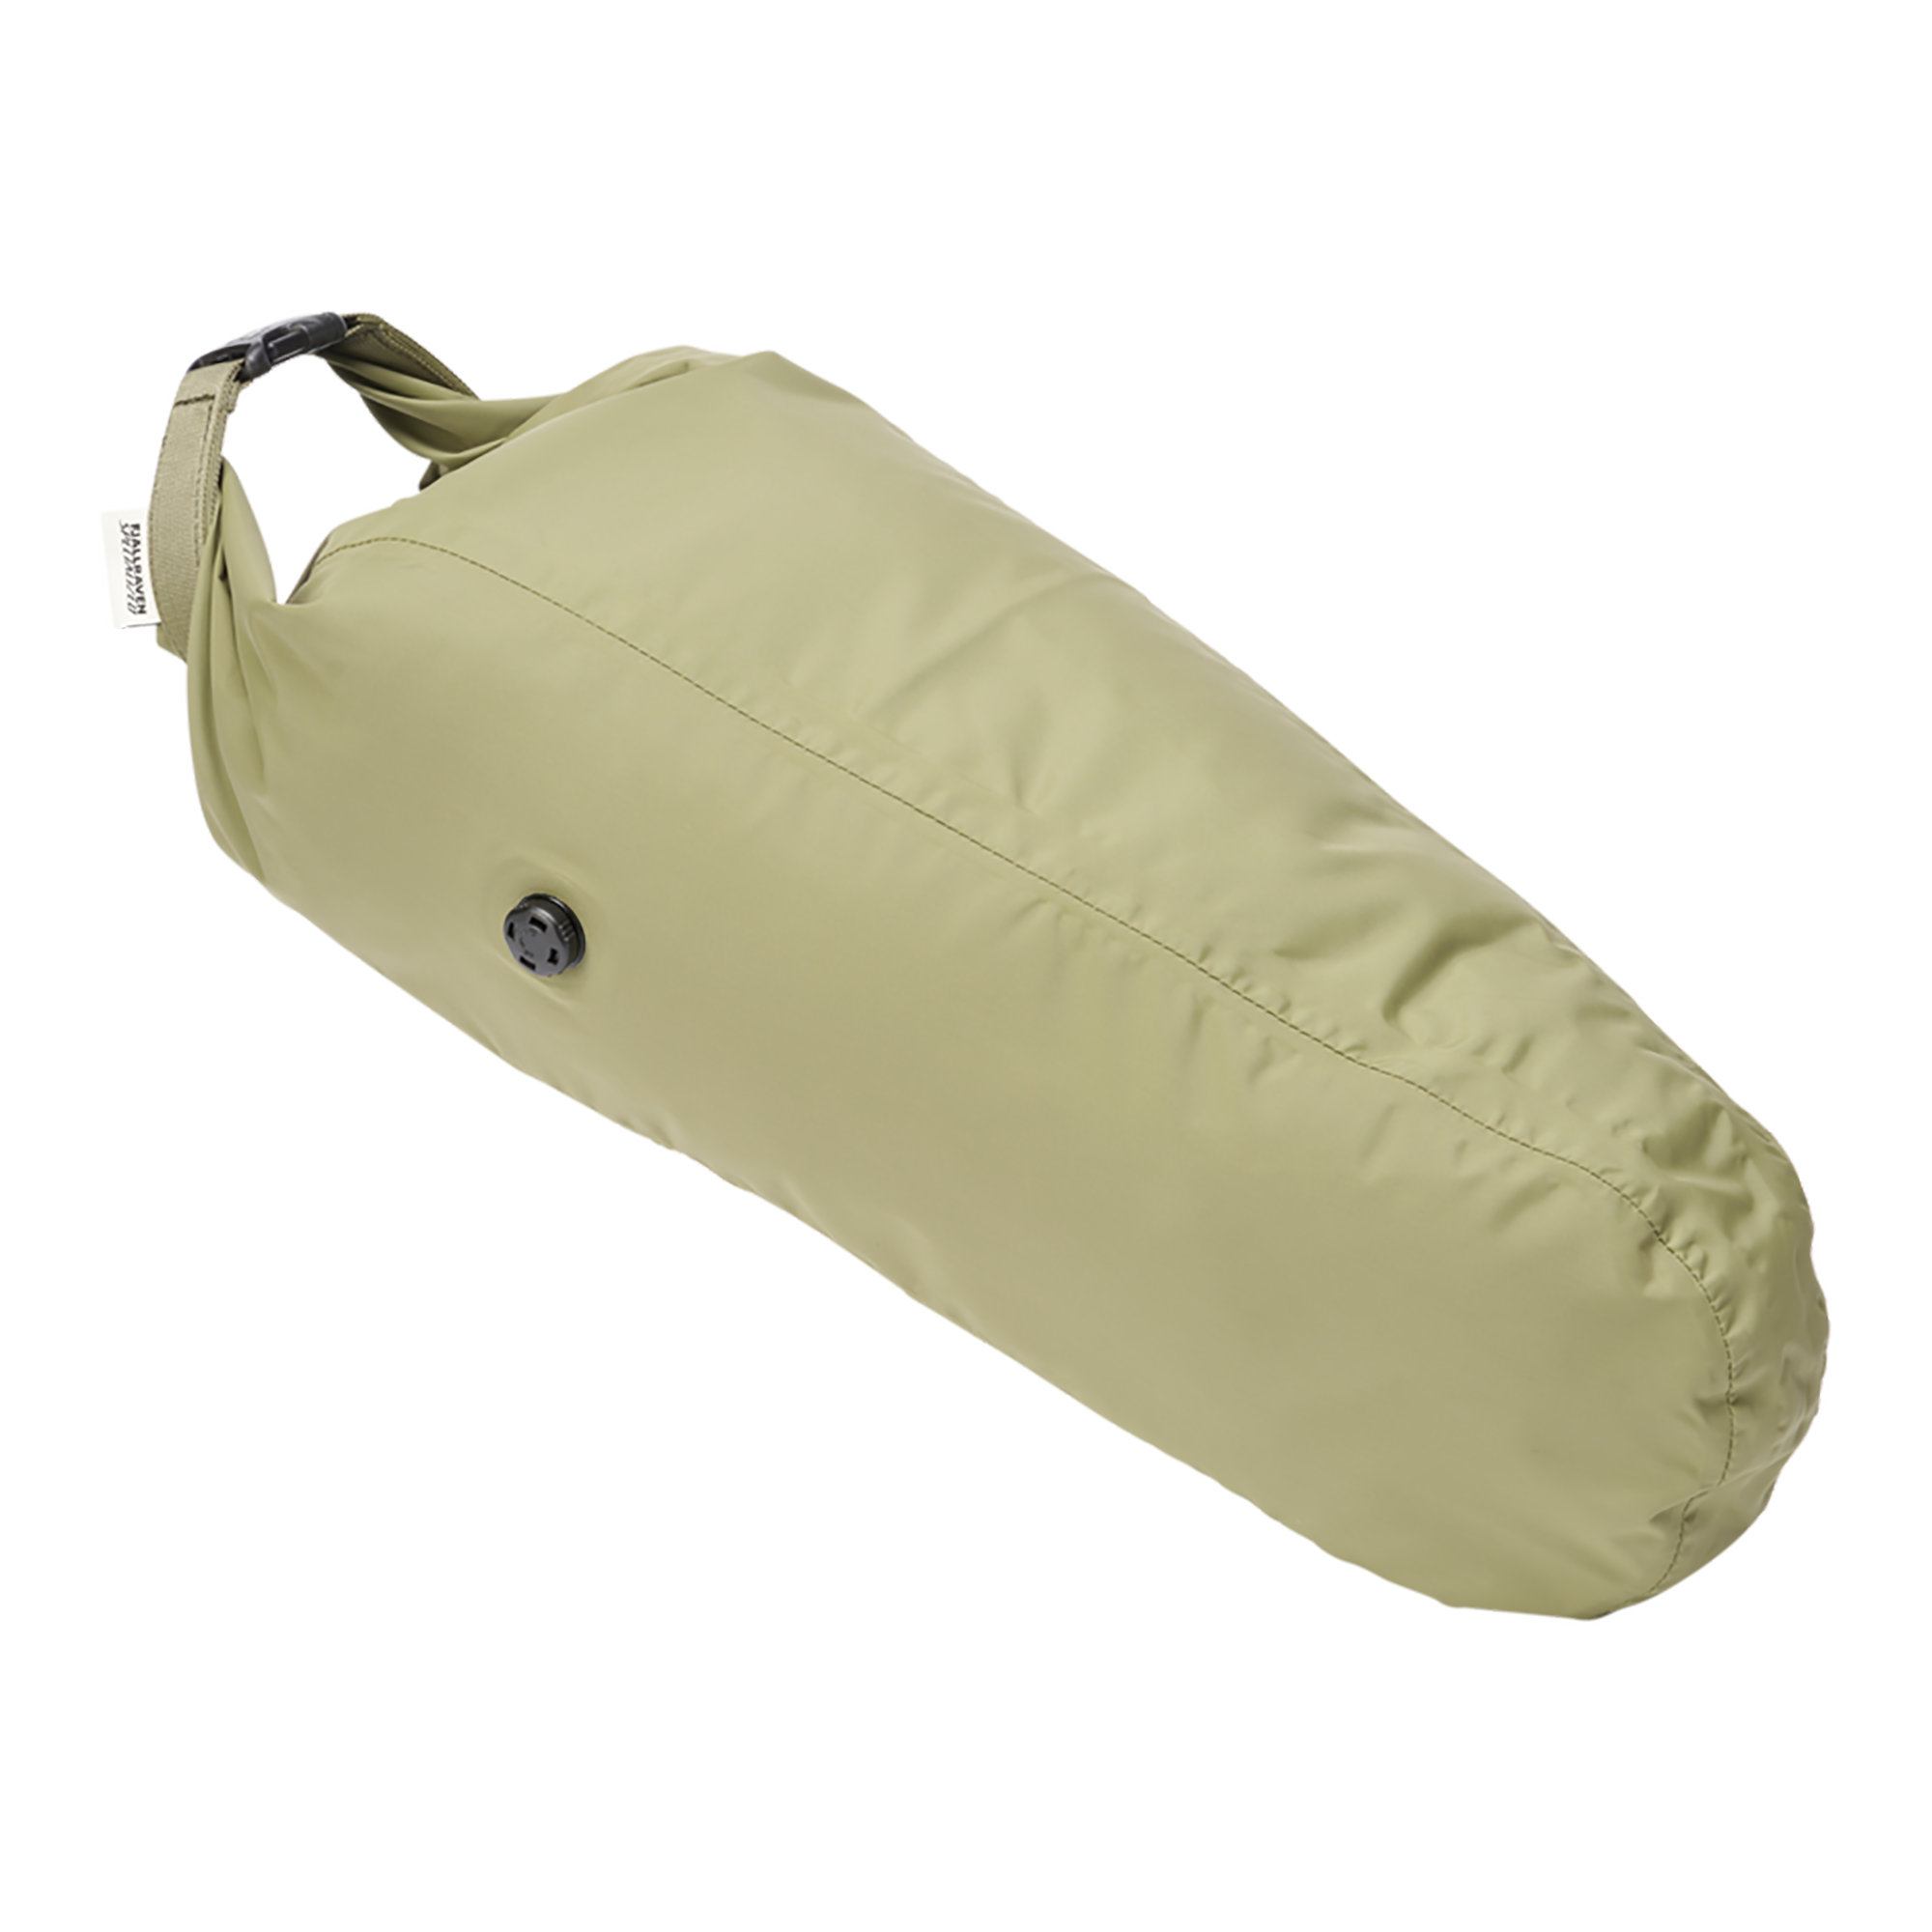 Specialized/Fjällräven Seatbag Drybag